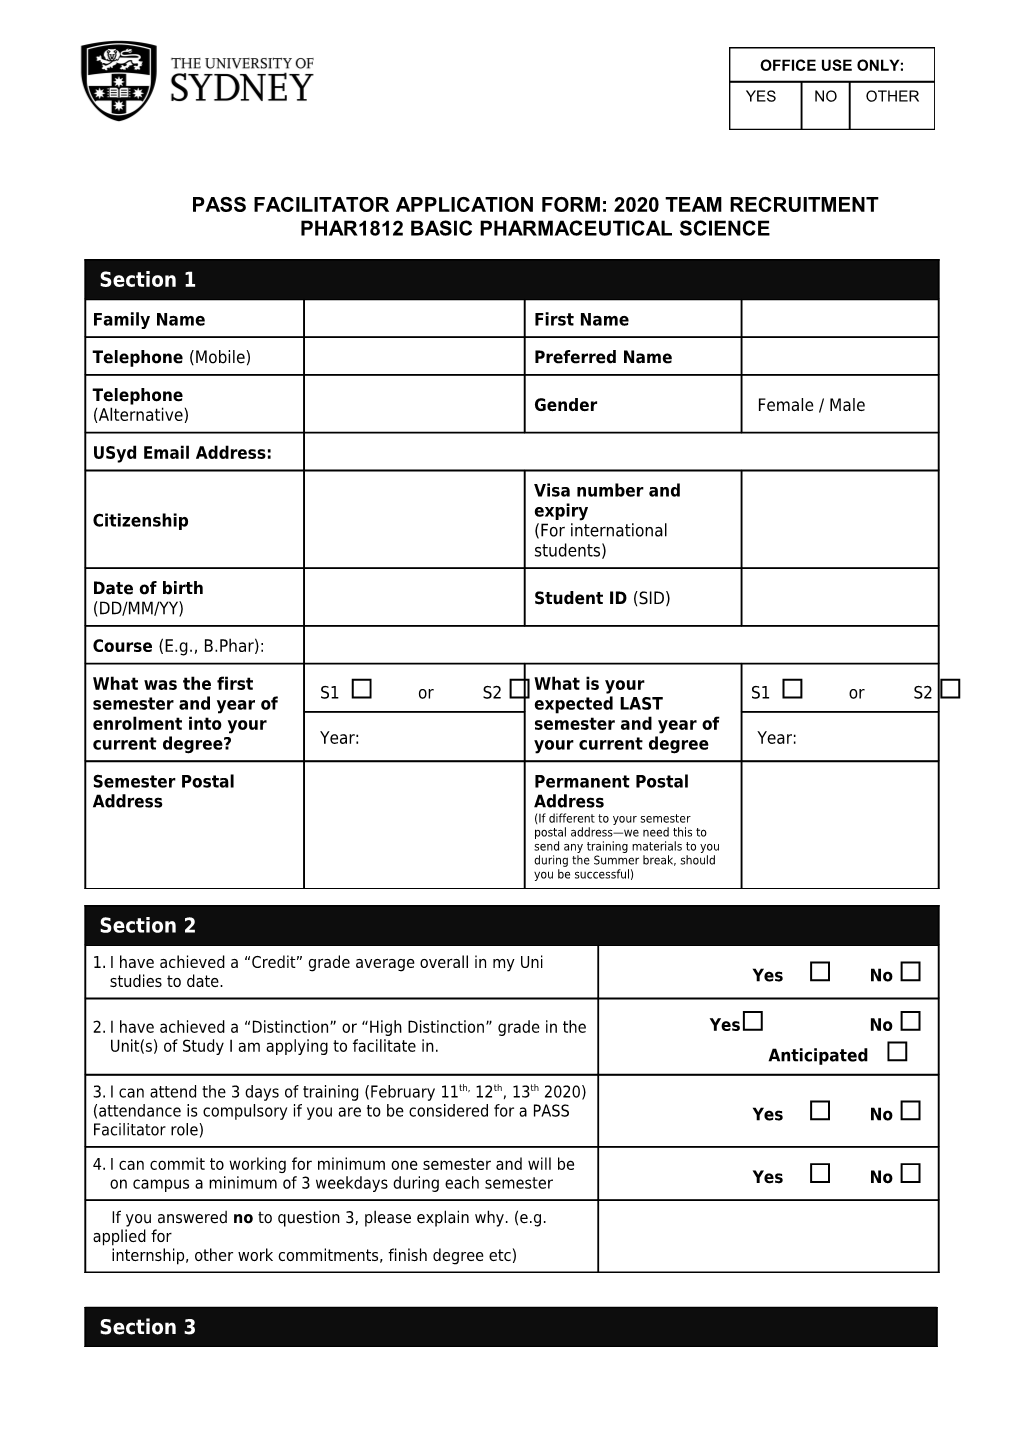 PASS Pharmacy Facilitator Application Form